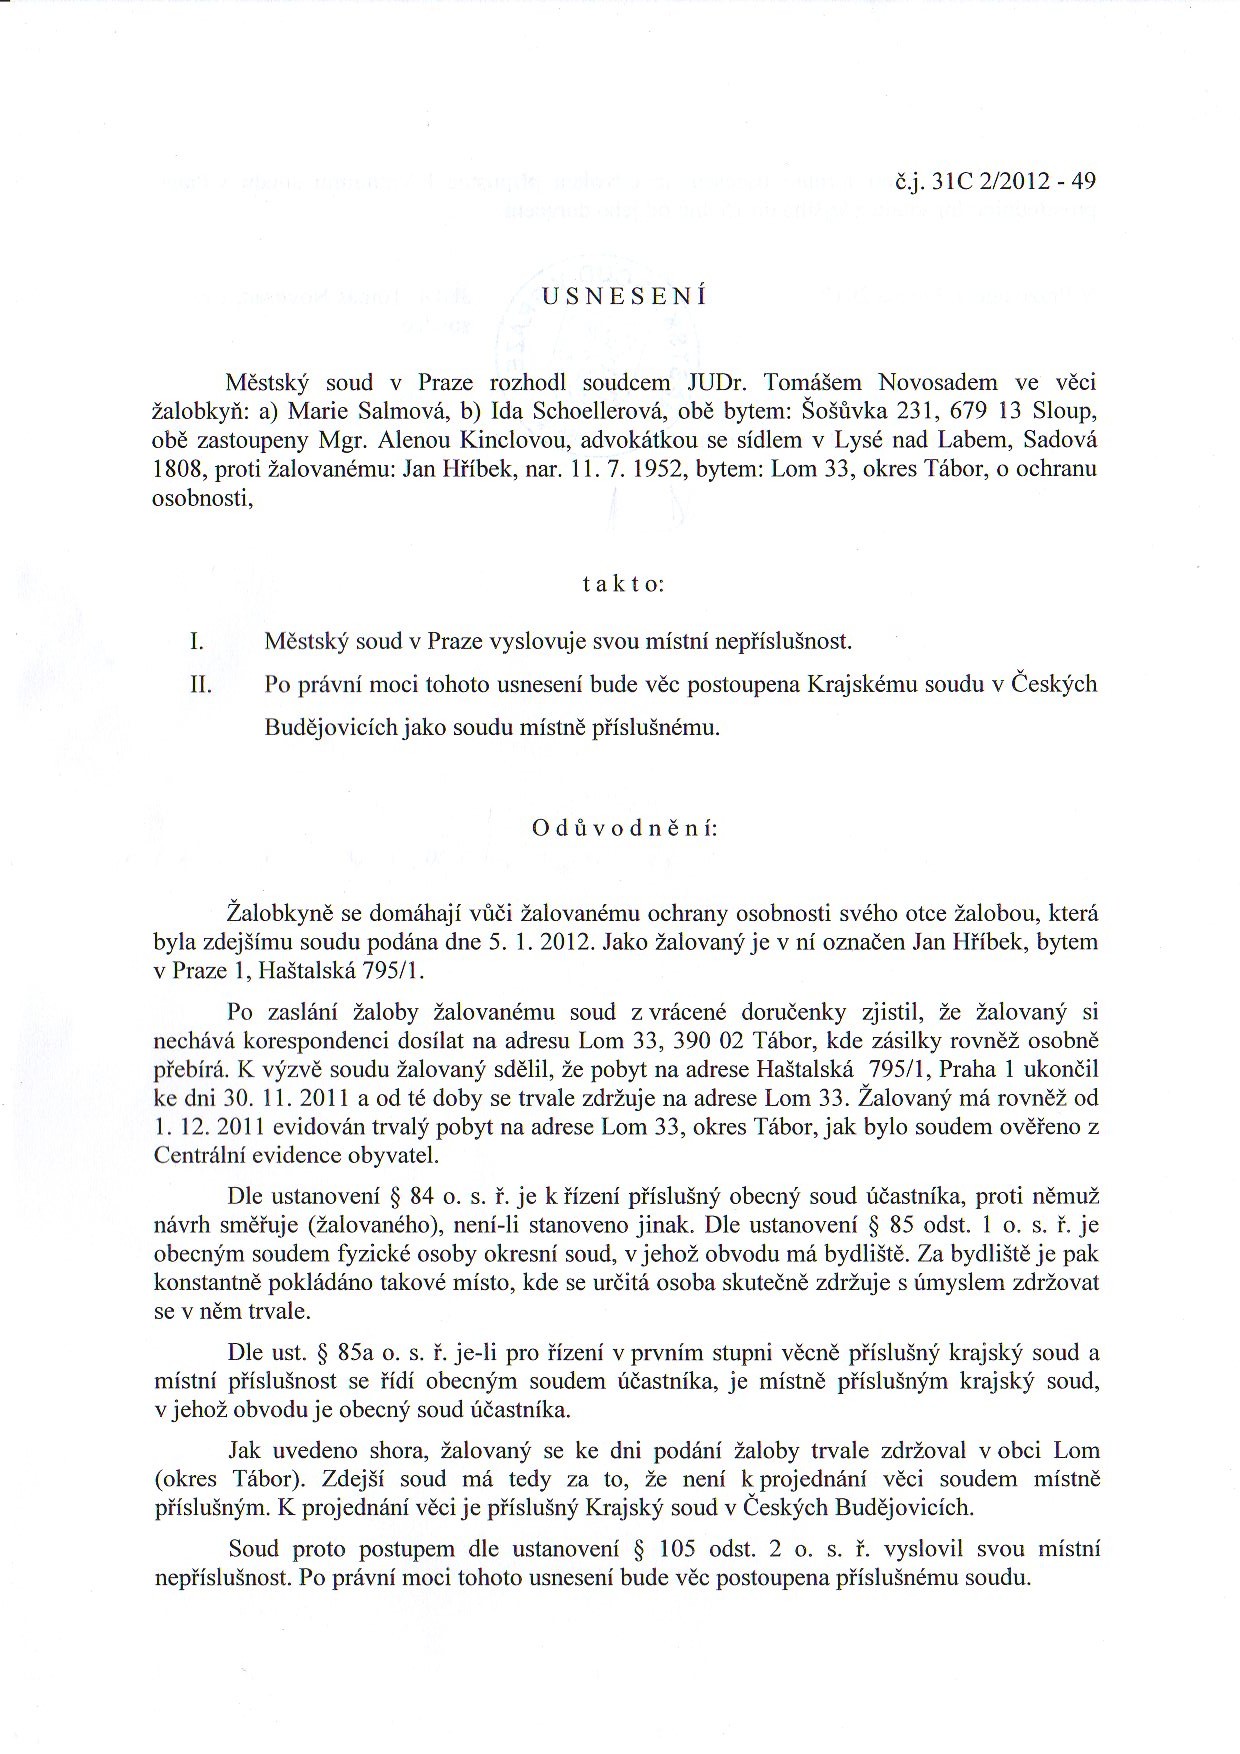 Usnesení MS Praha -001a